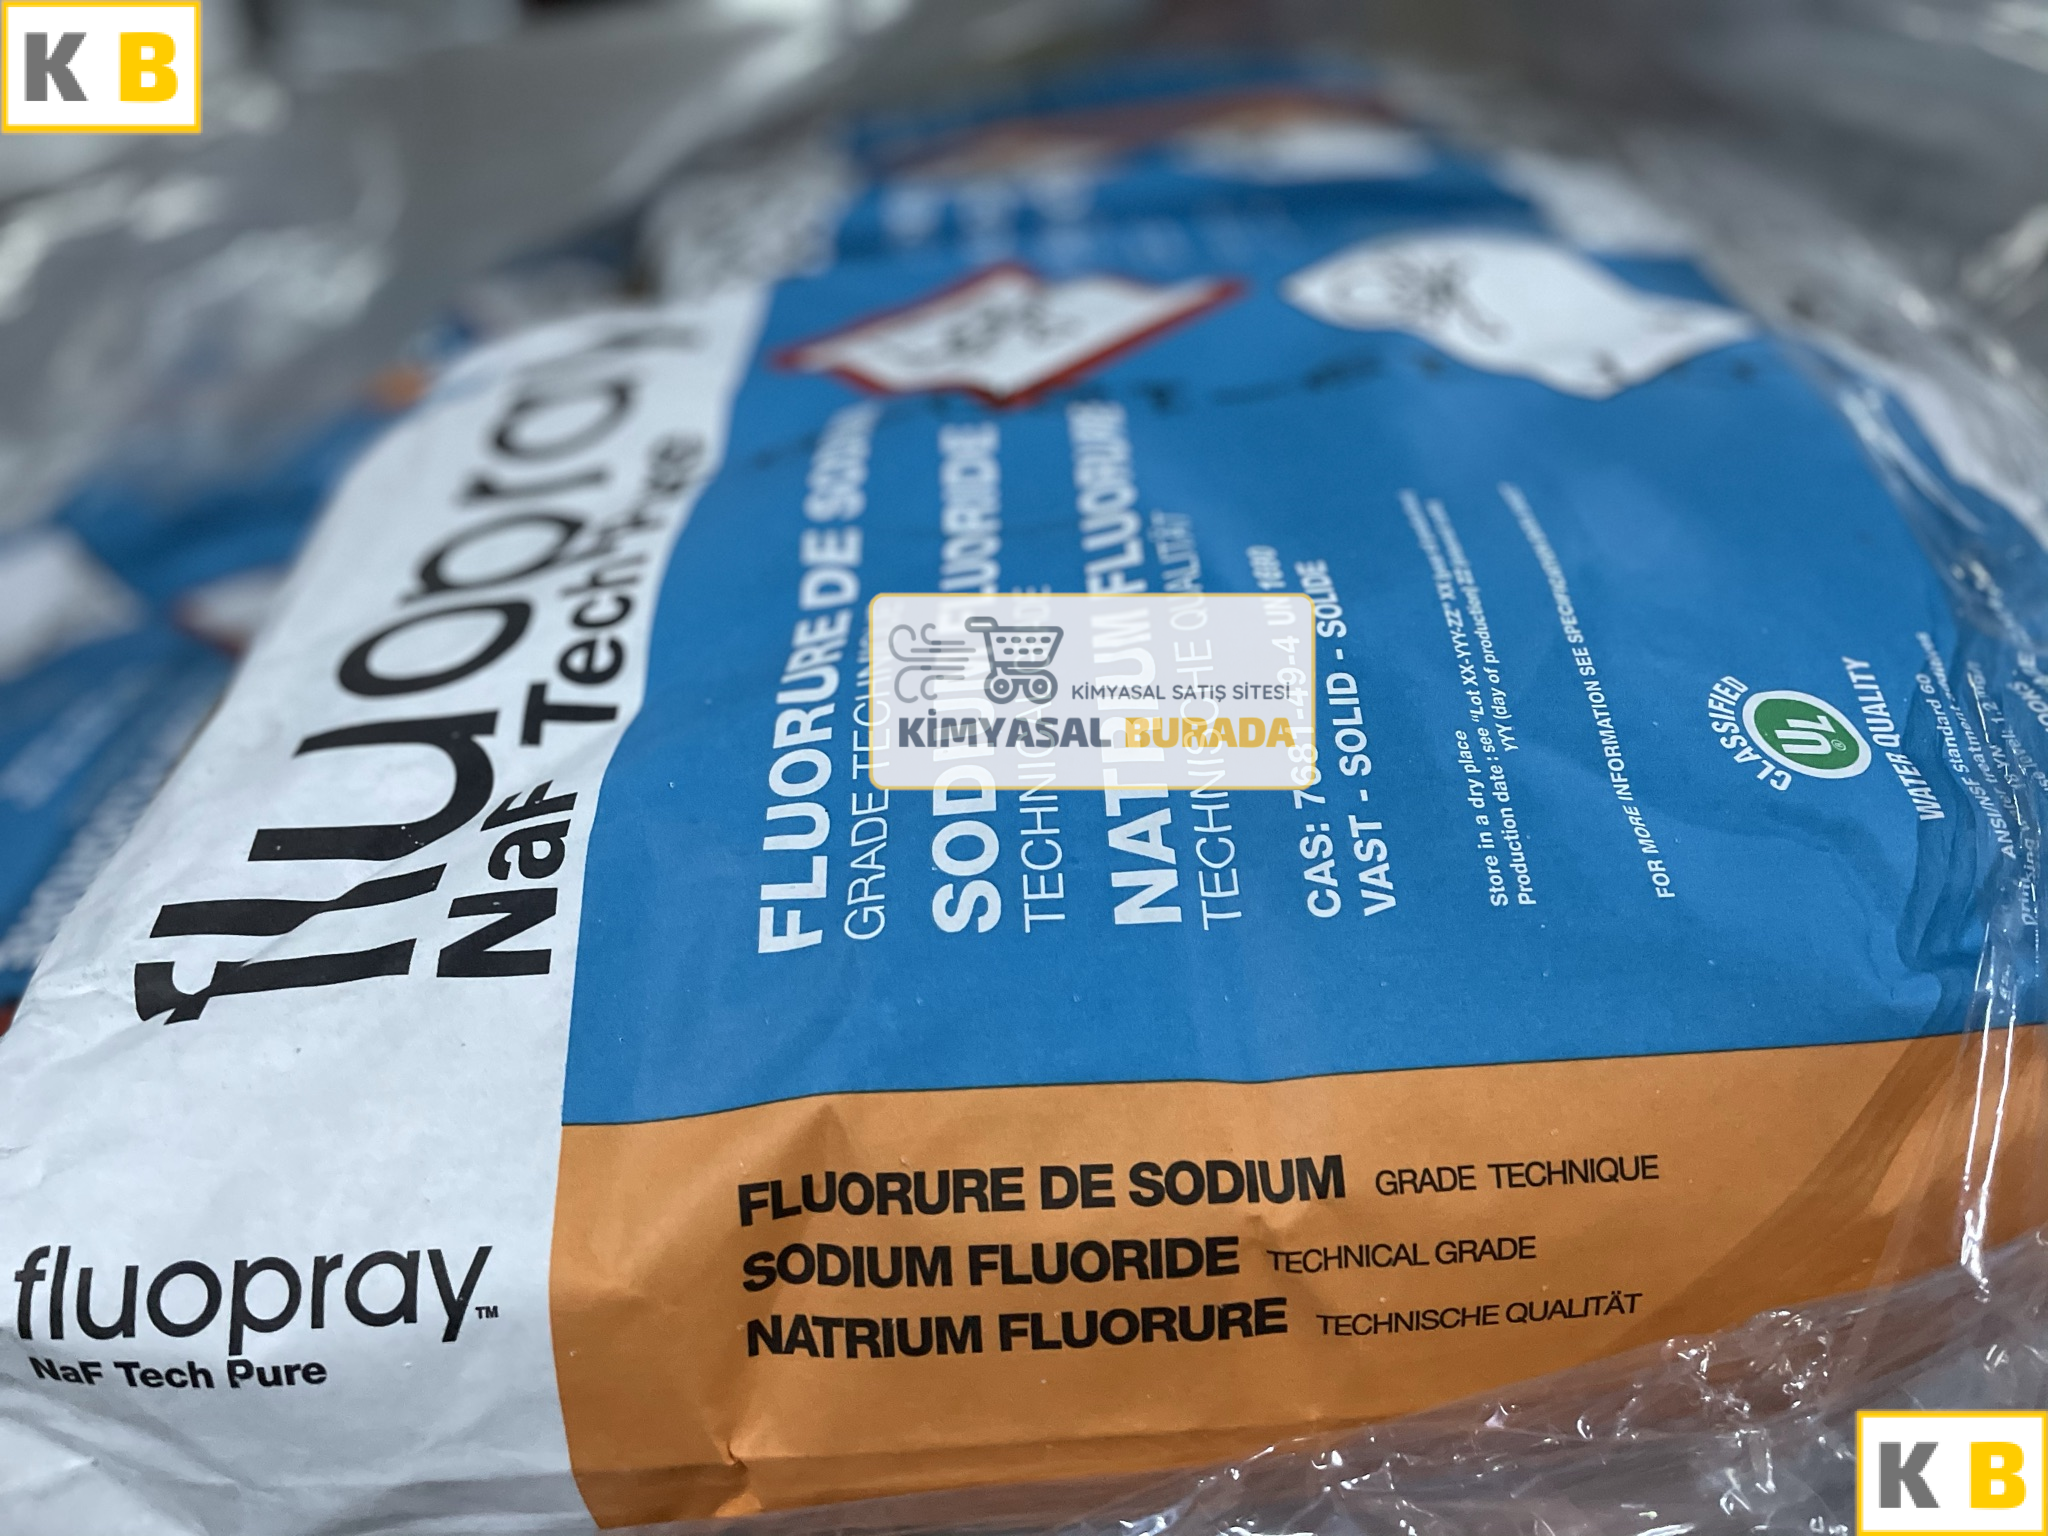 Sodium Fluoride